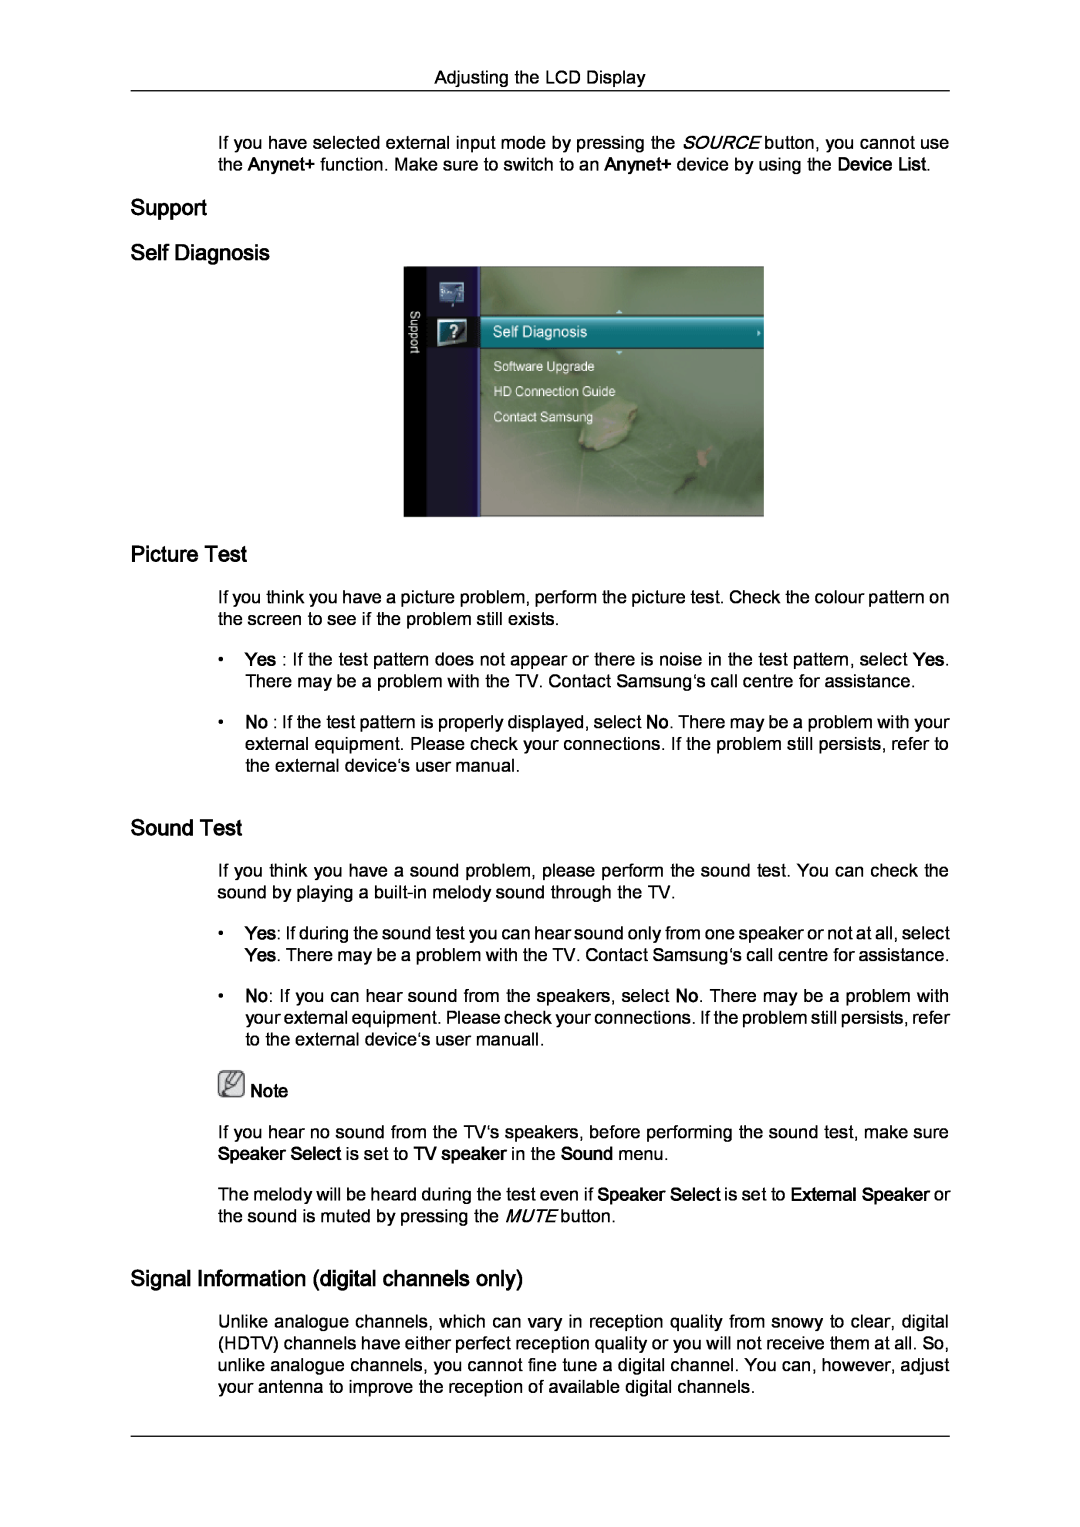 Samsung LS24TDVSUV/EN manual Support Self Diagnosis Picture Test, Sound Test, Signal Information digital channels only 